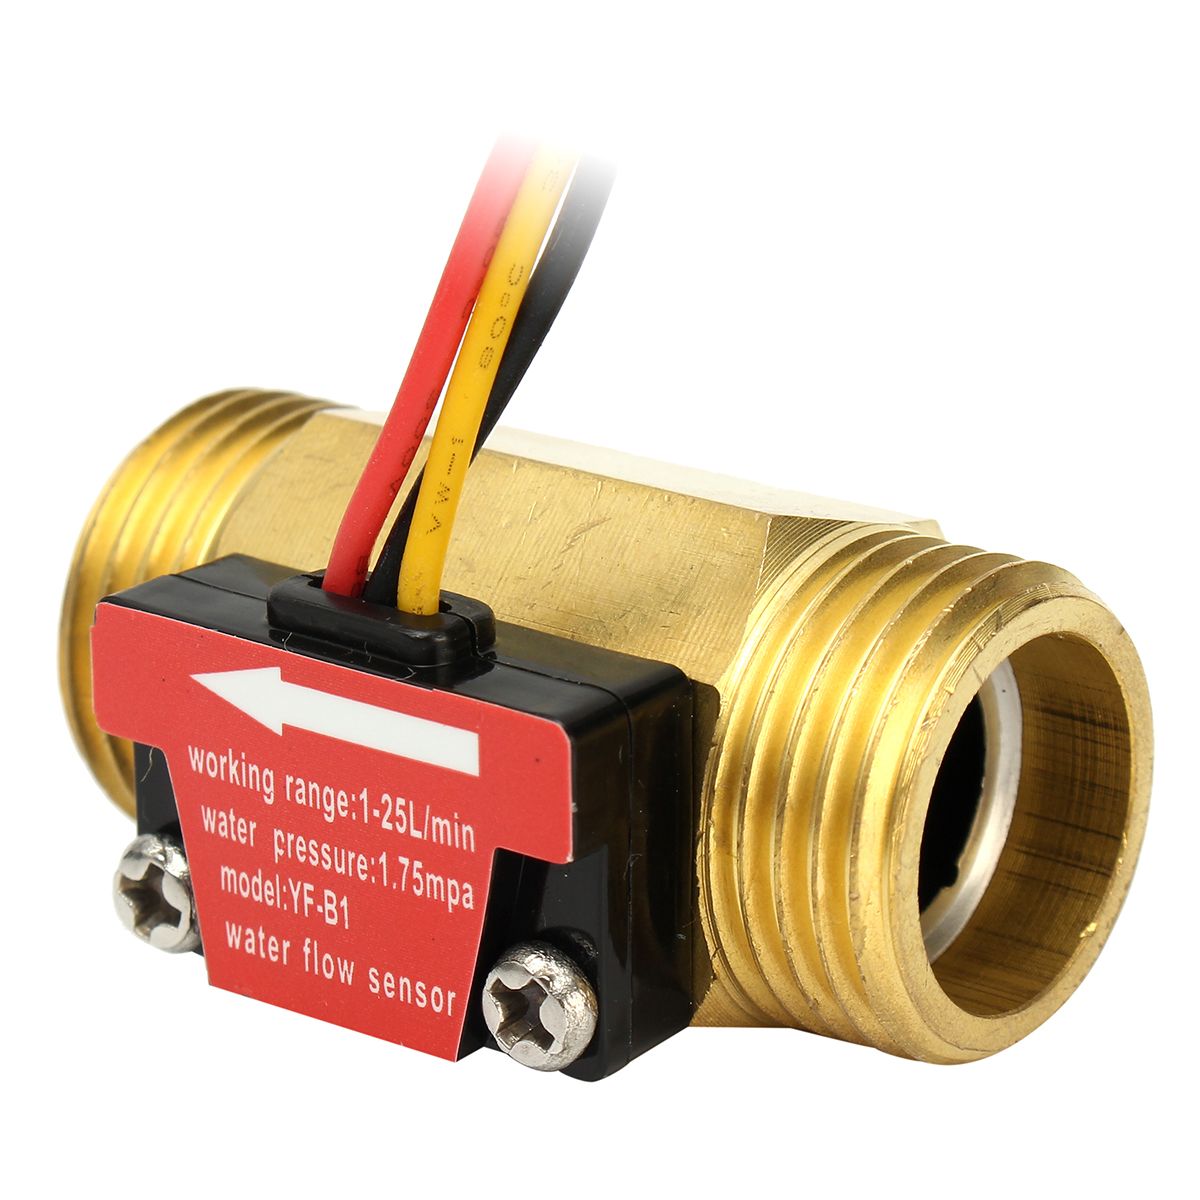 Full-Copper-Water-Flow-Sensor-175Mpa-G12-Pulse-Hall-Flow-Meter-Switch-1-25LMin-1181778